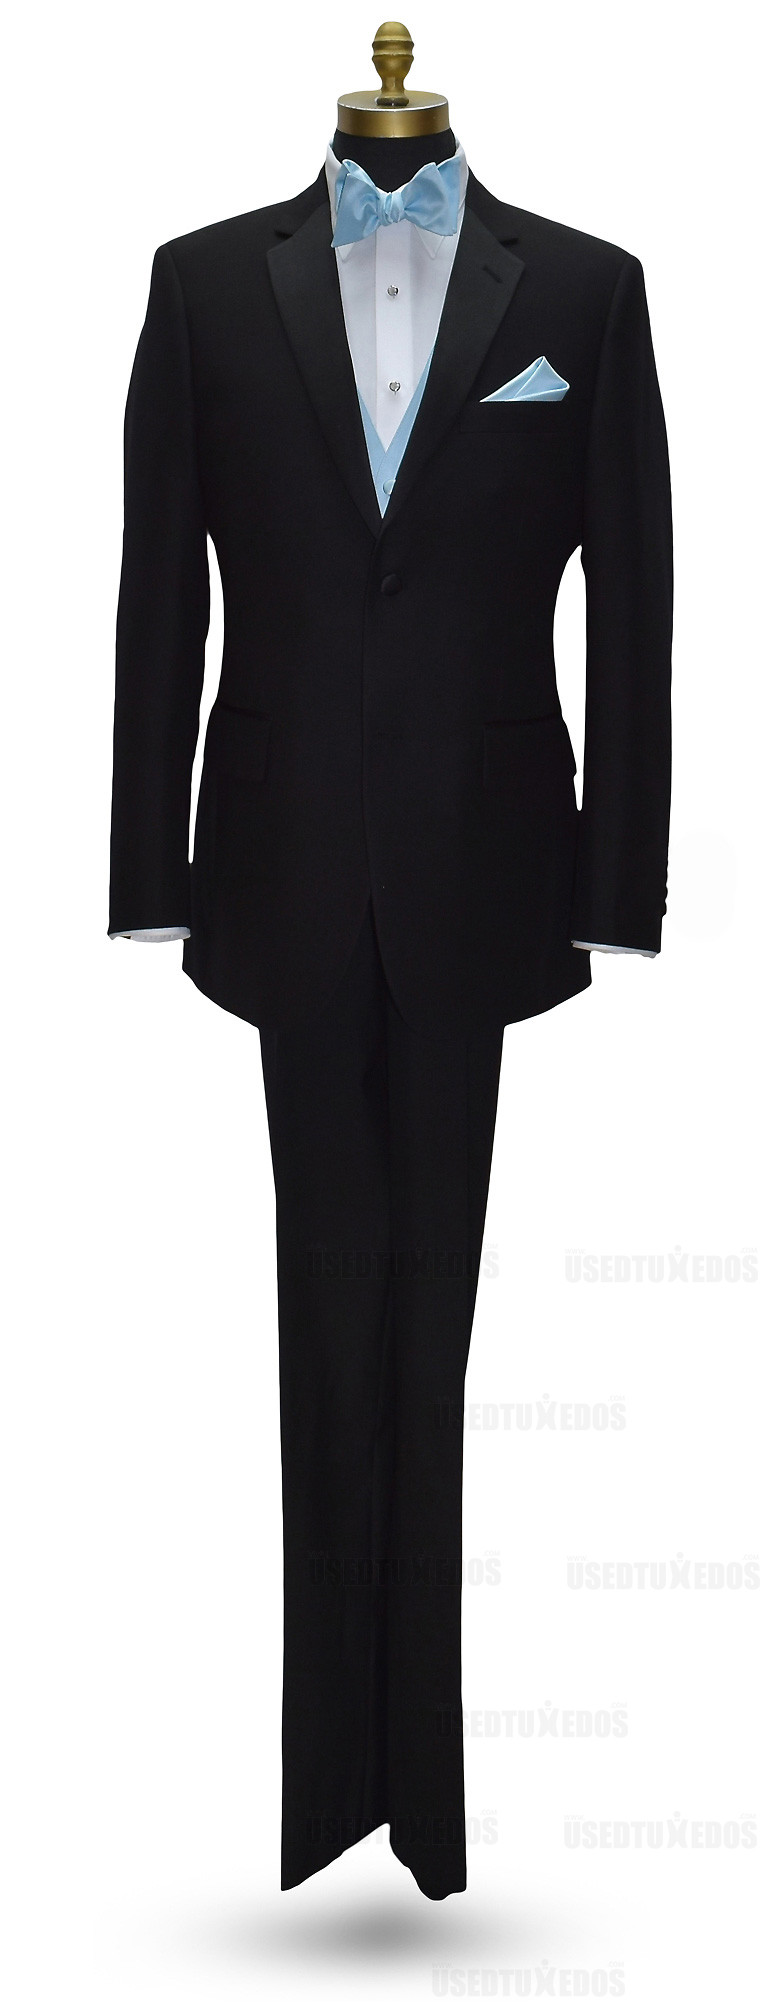 black San Miguel notch lapel tuxedo with capri-blue self-tie bowtie and capri-blue vest and pocket handkerchief